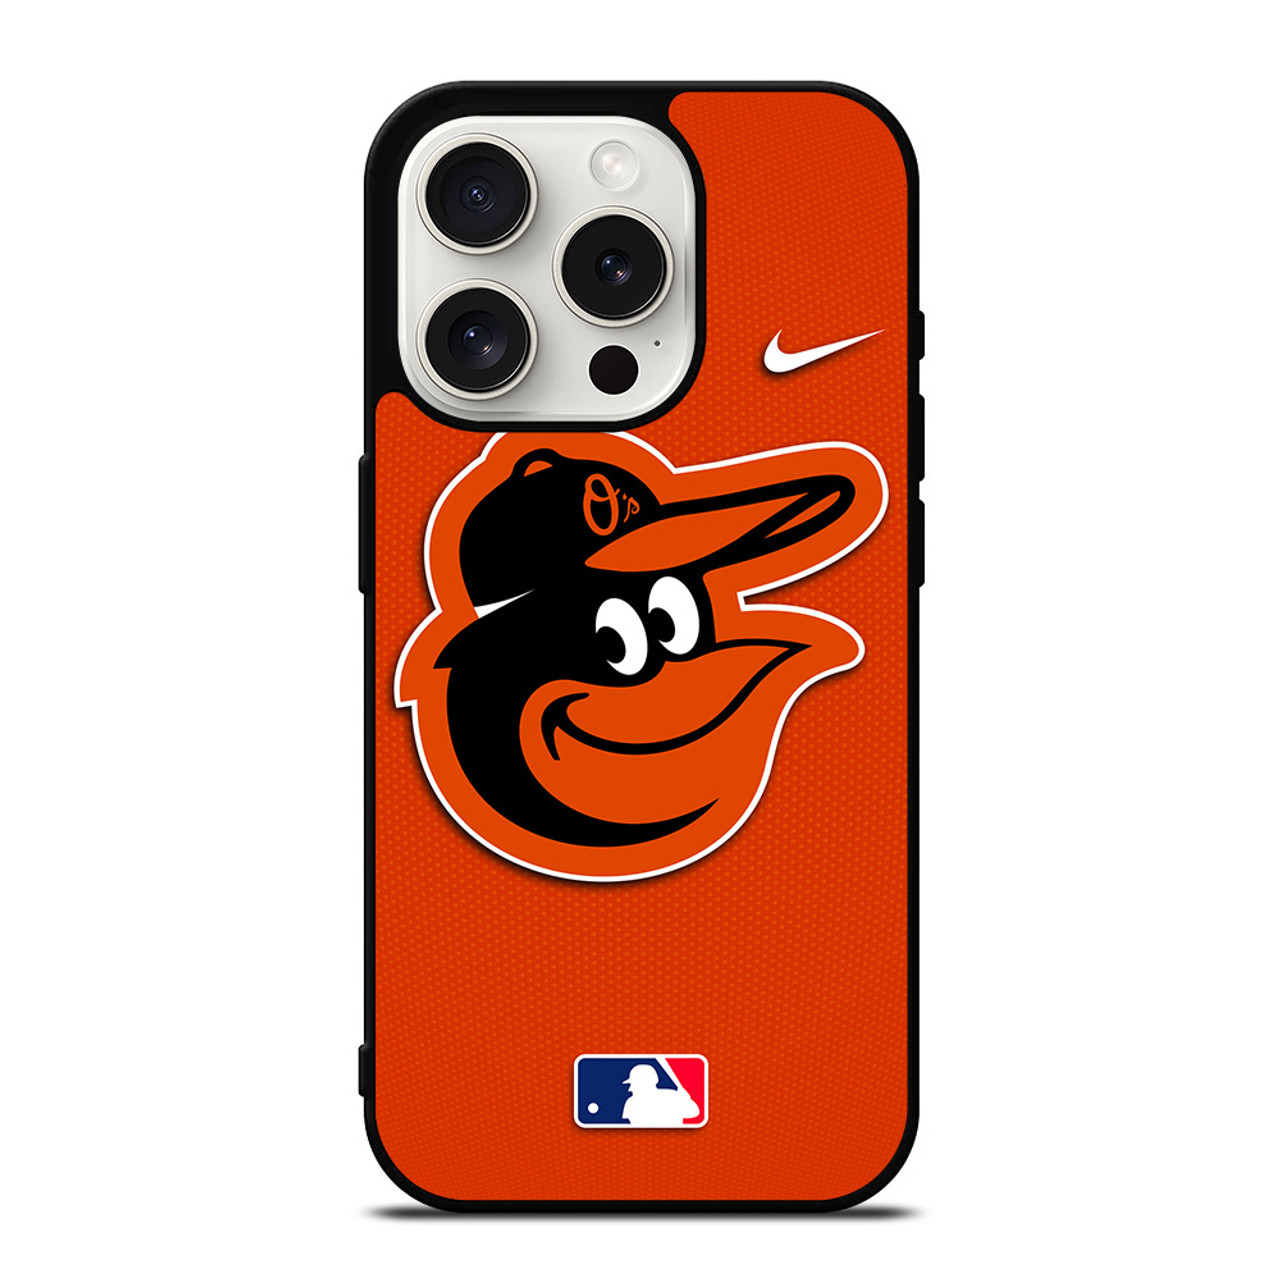 Nike Baltimore Orioles MLB Fan Shop